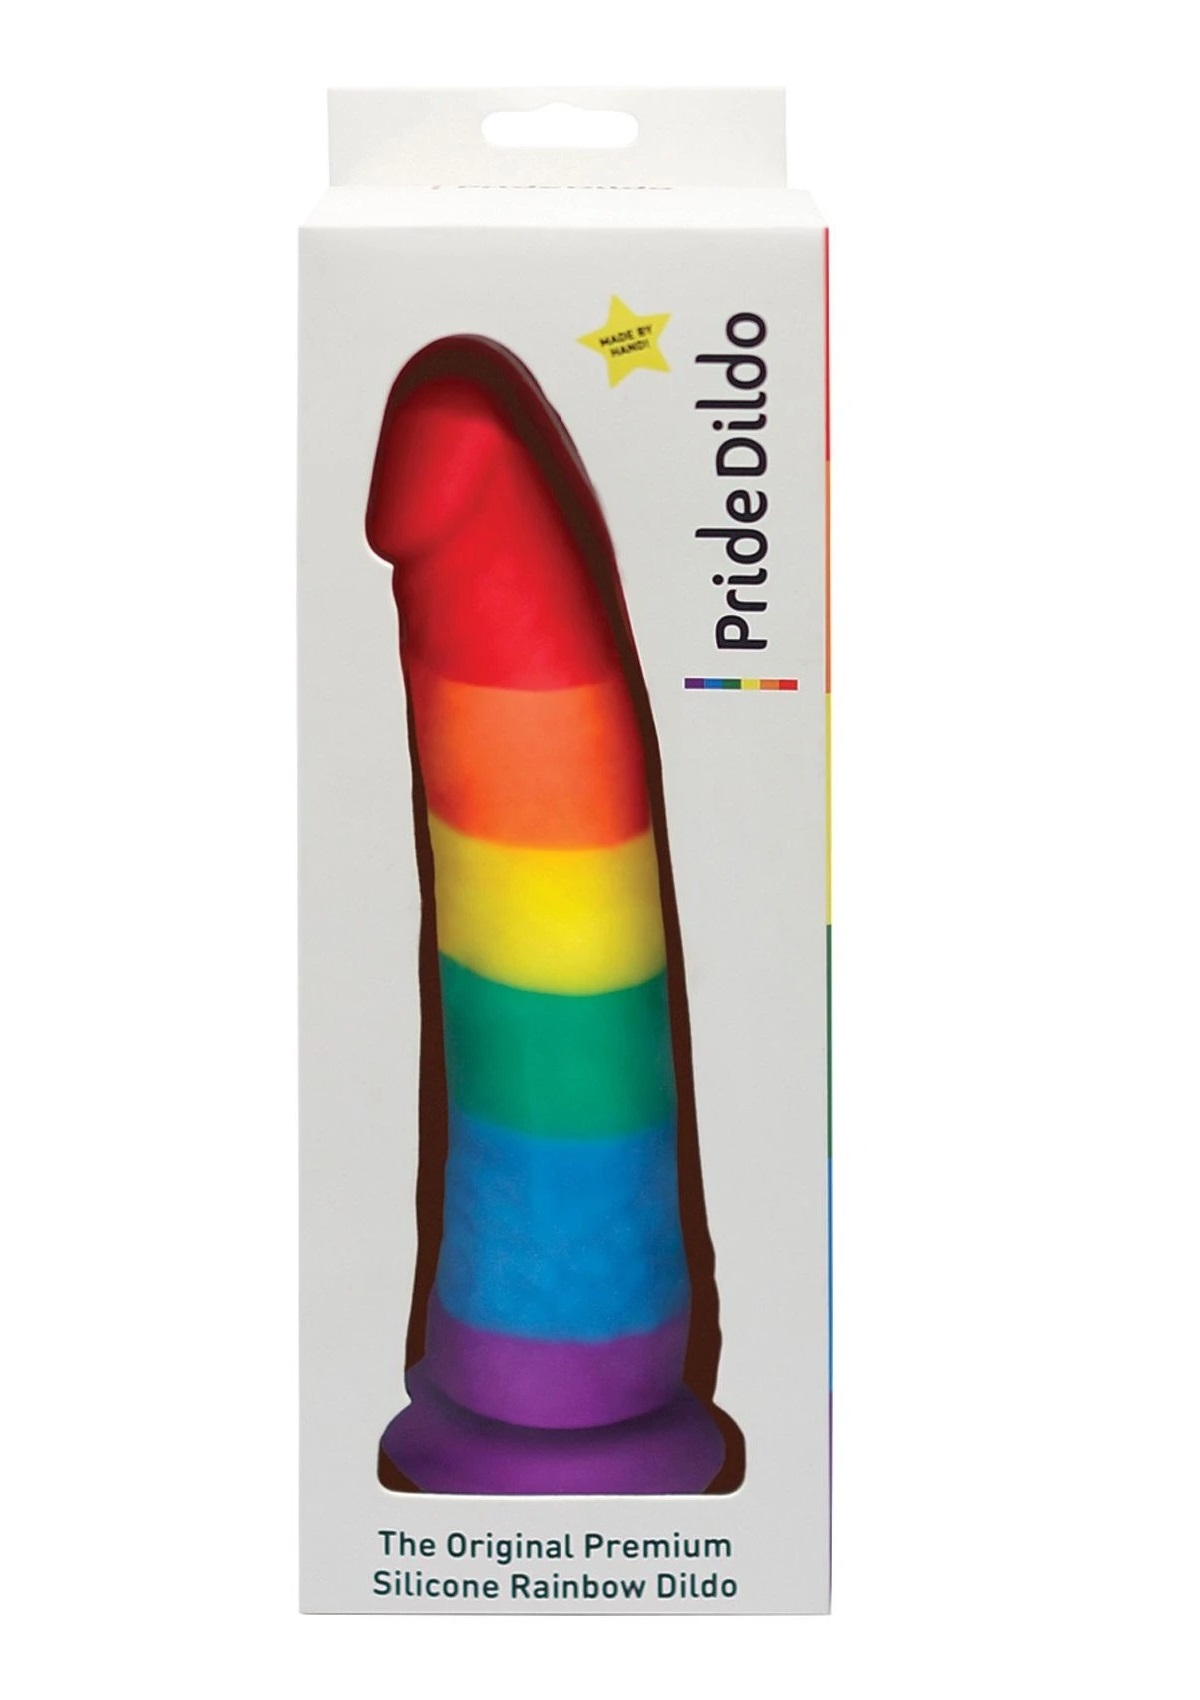 Pride Dildo - Silicone Rainbow Dildo.